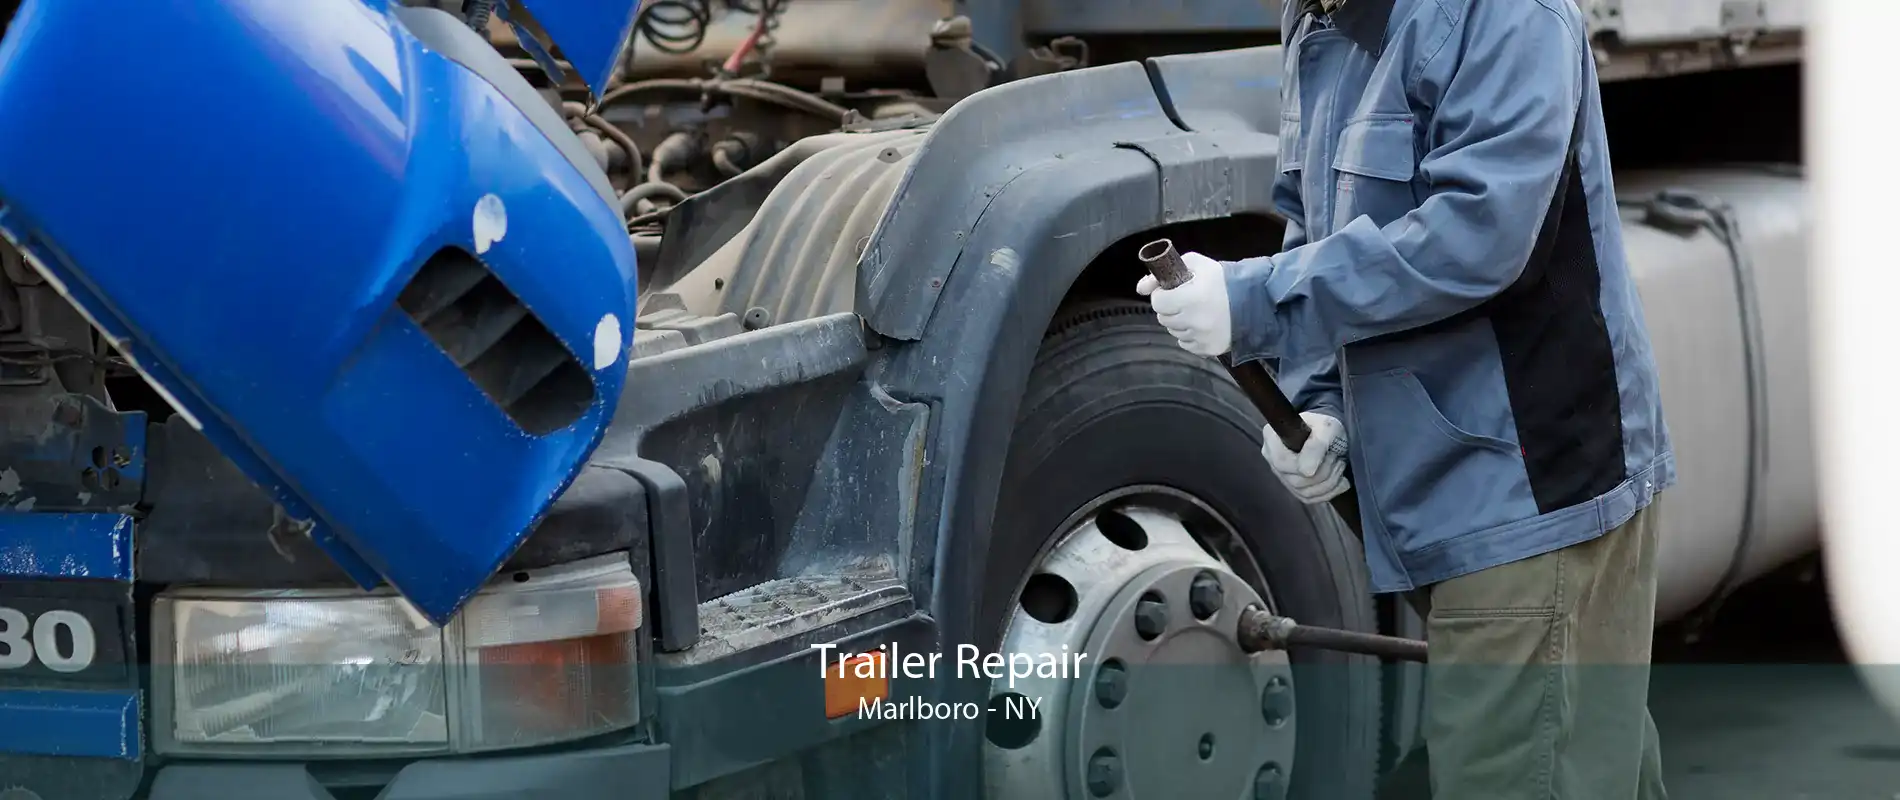 Trailer Repair Marlboro - NY